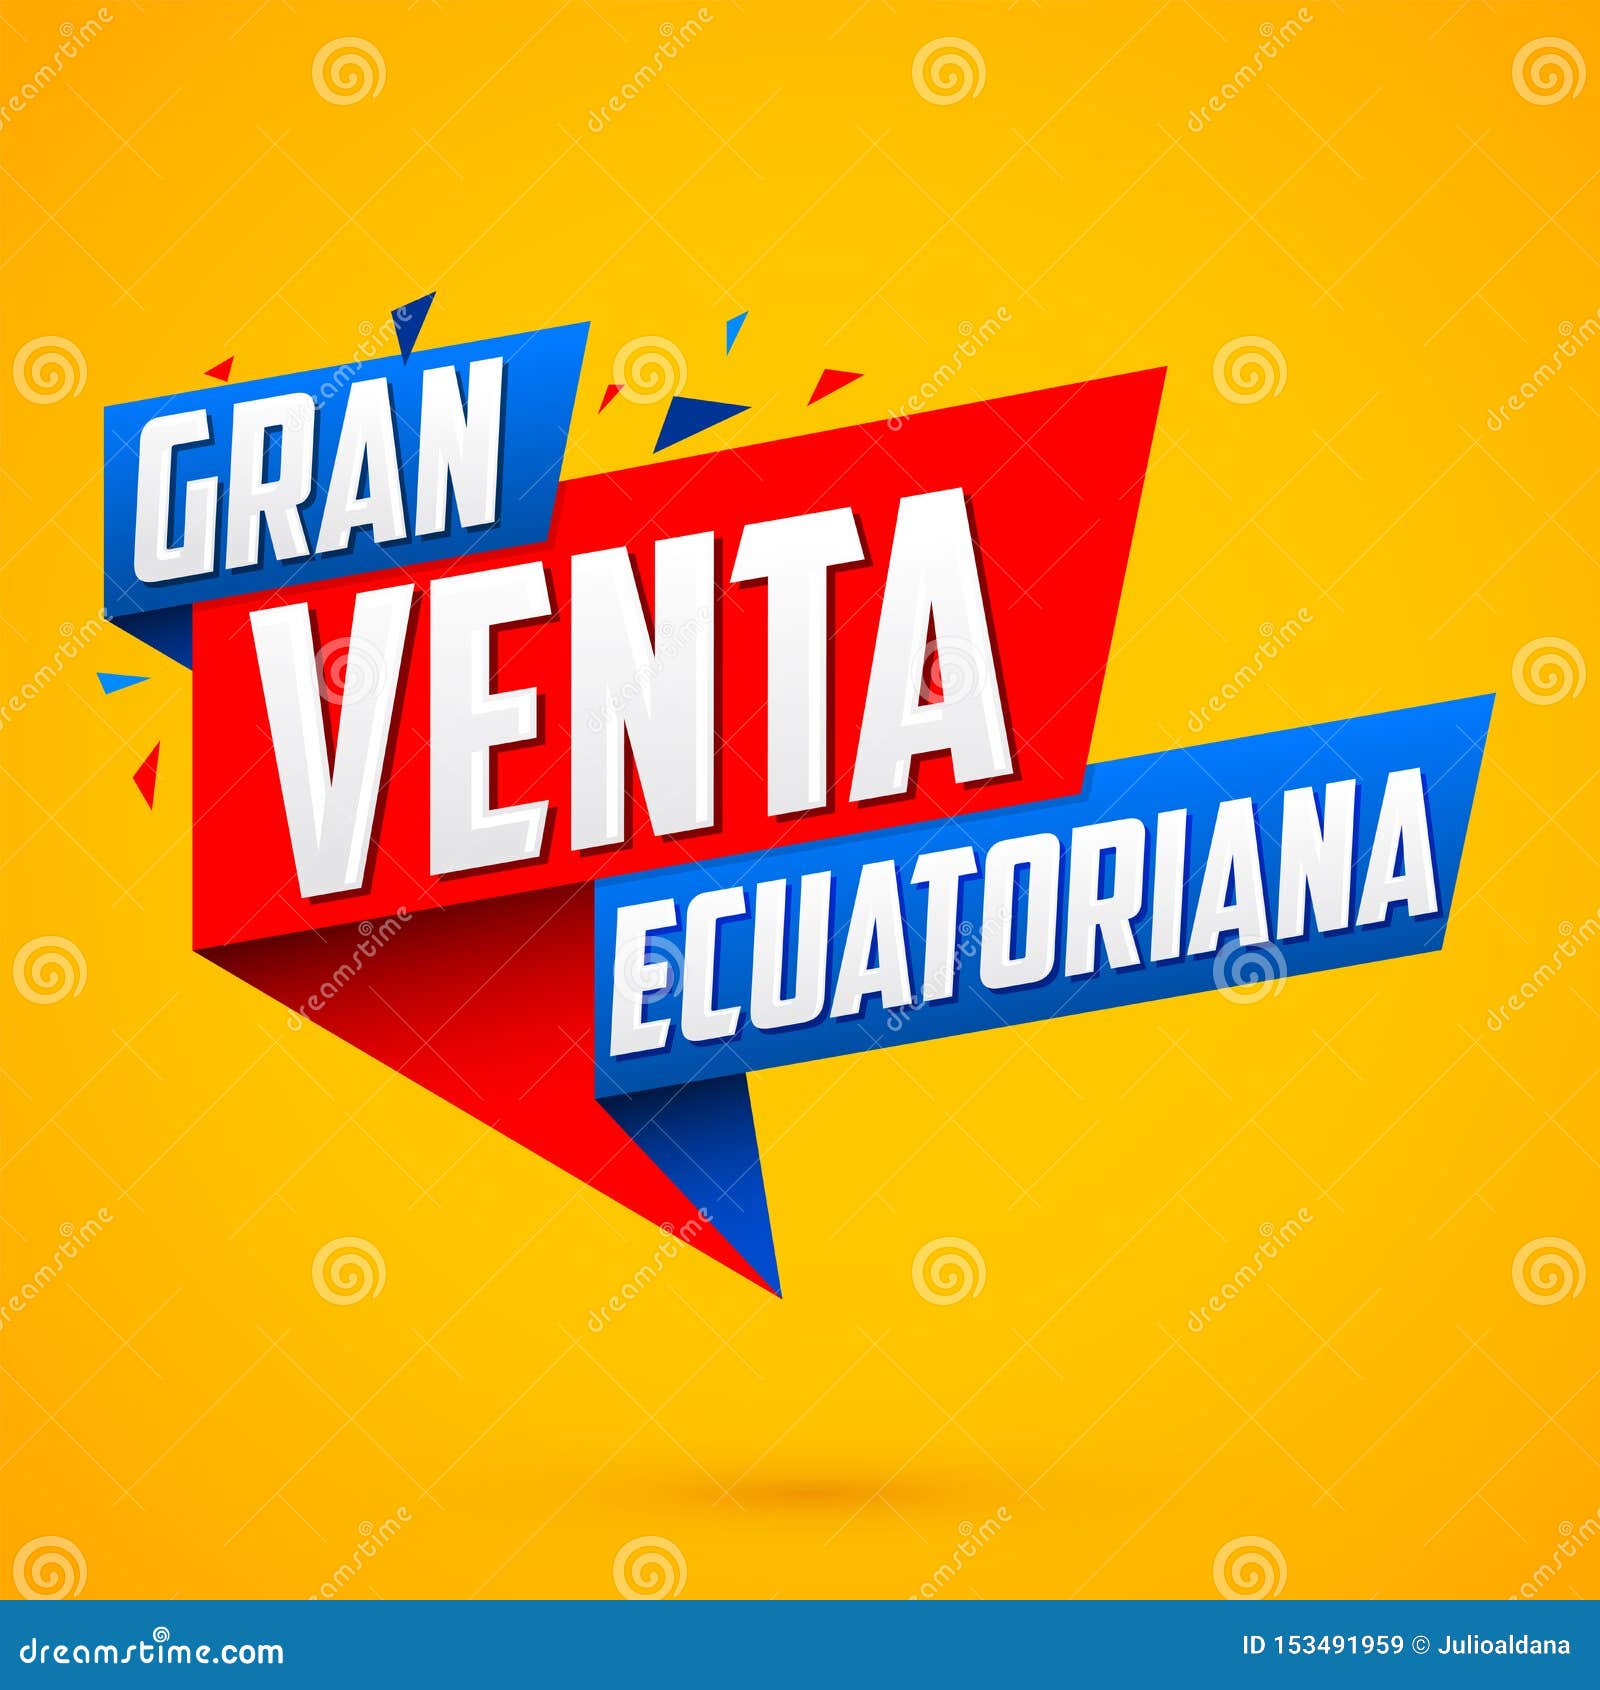 gran venta ecuatoriana, ecuadorian big sale spanish text